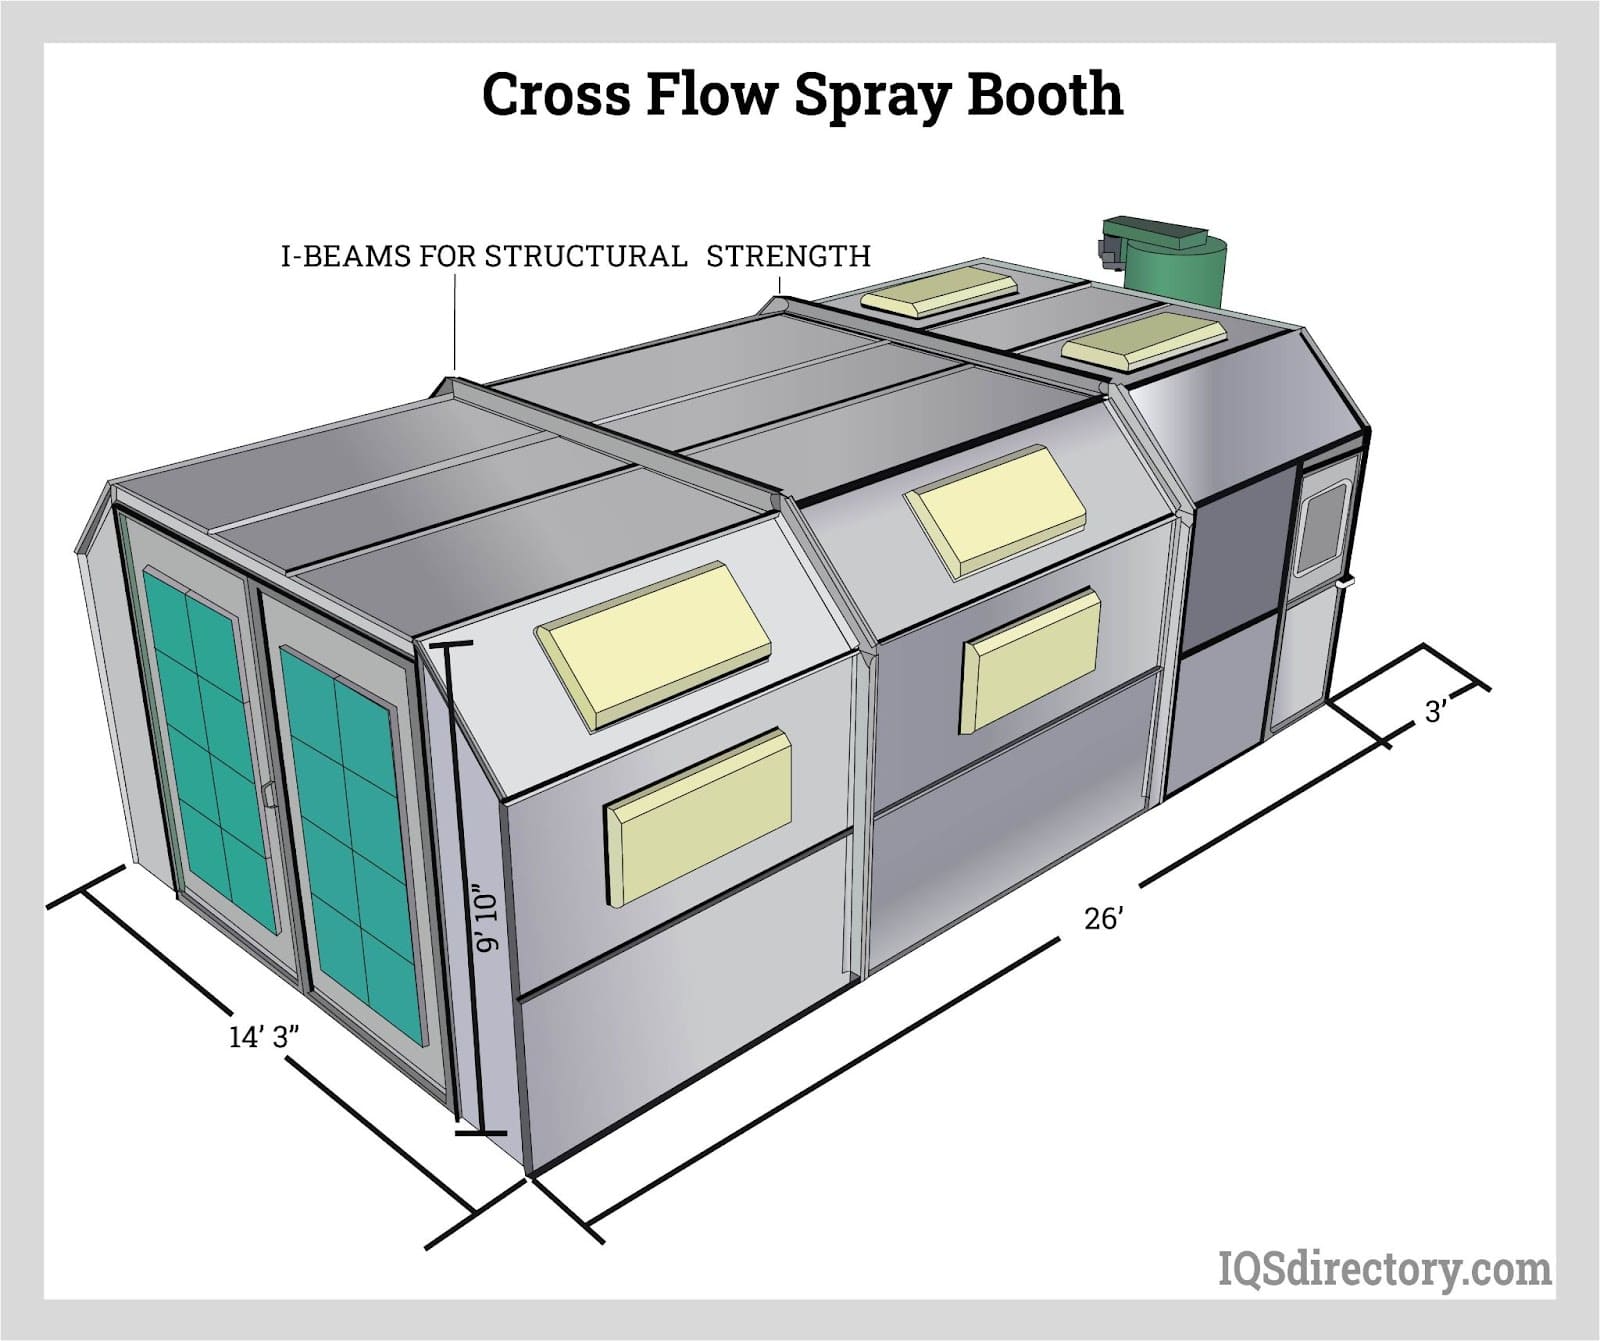 Cross Flow Spray Booth